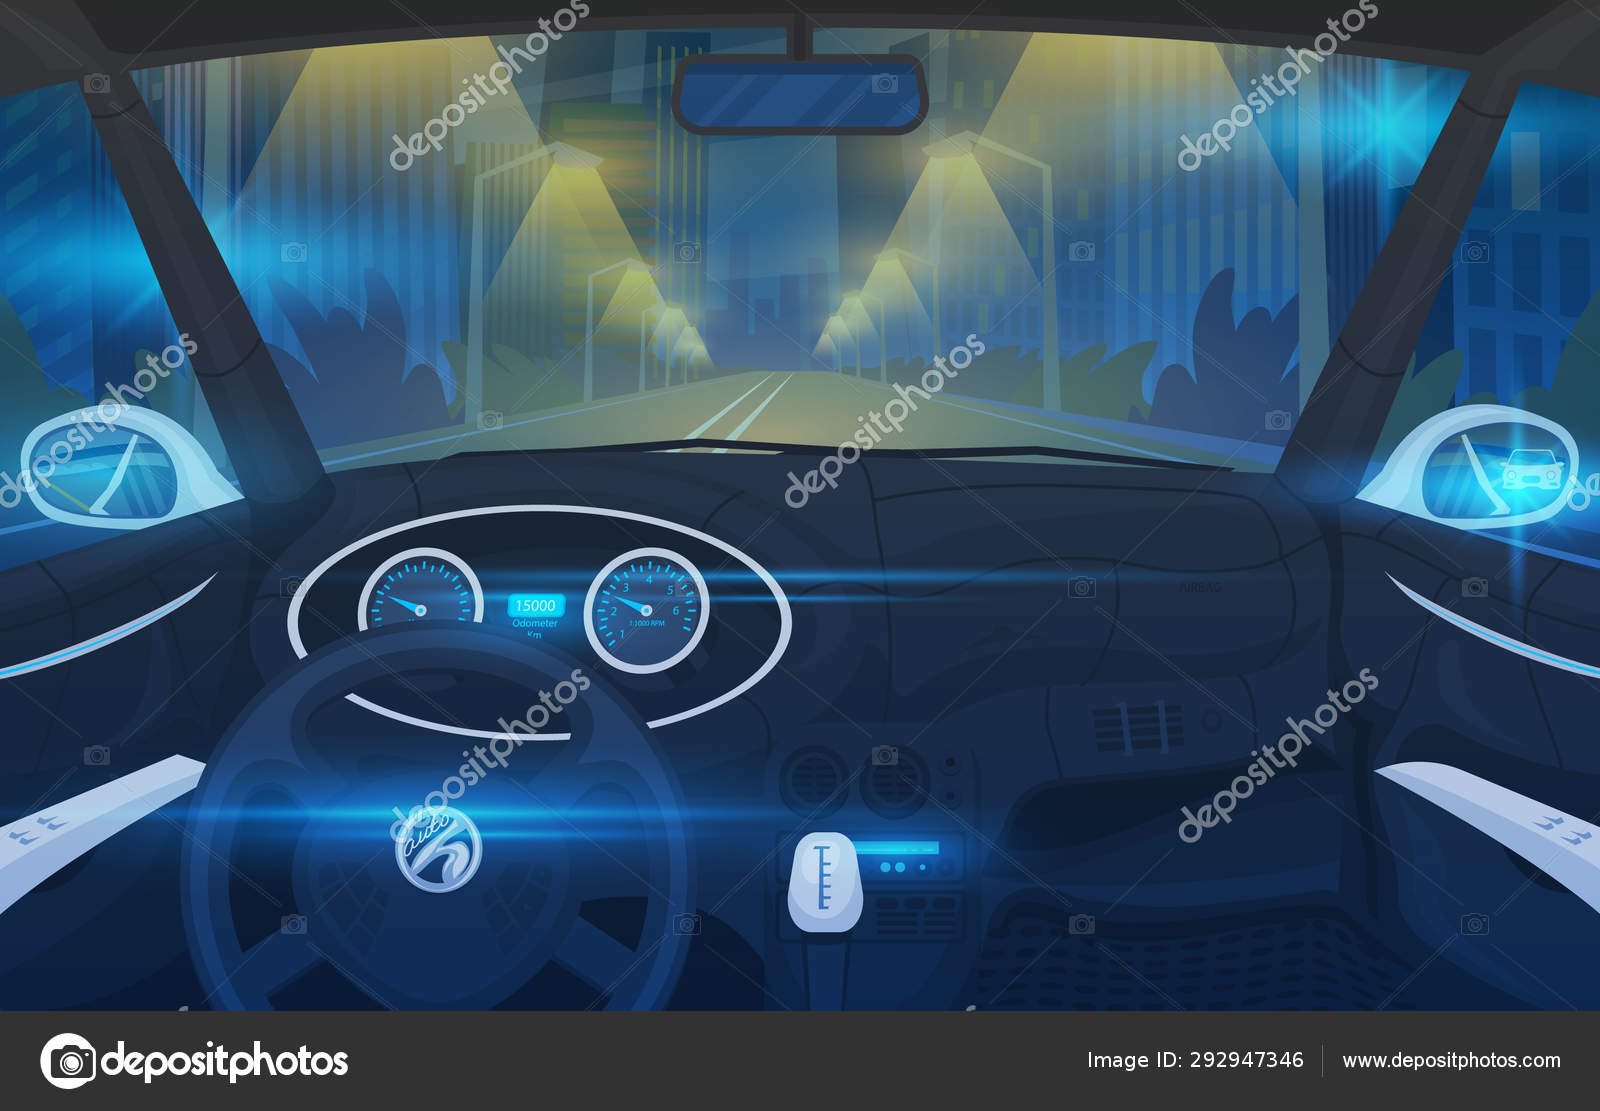 https://st4.depositphotos.com/9771418/29294/v/1600/depositphotos_292947346-stock-illustration-futuristic-vehicle-salon-electric-smart.jpg